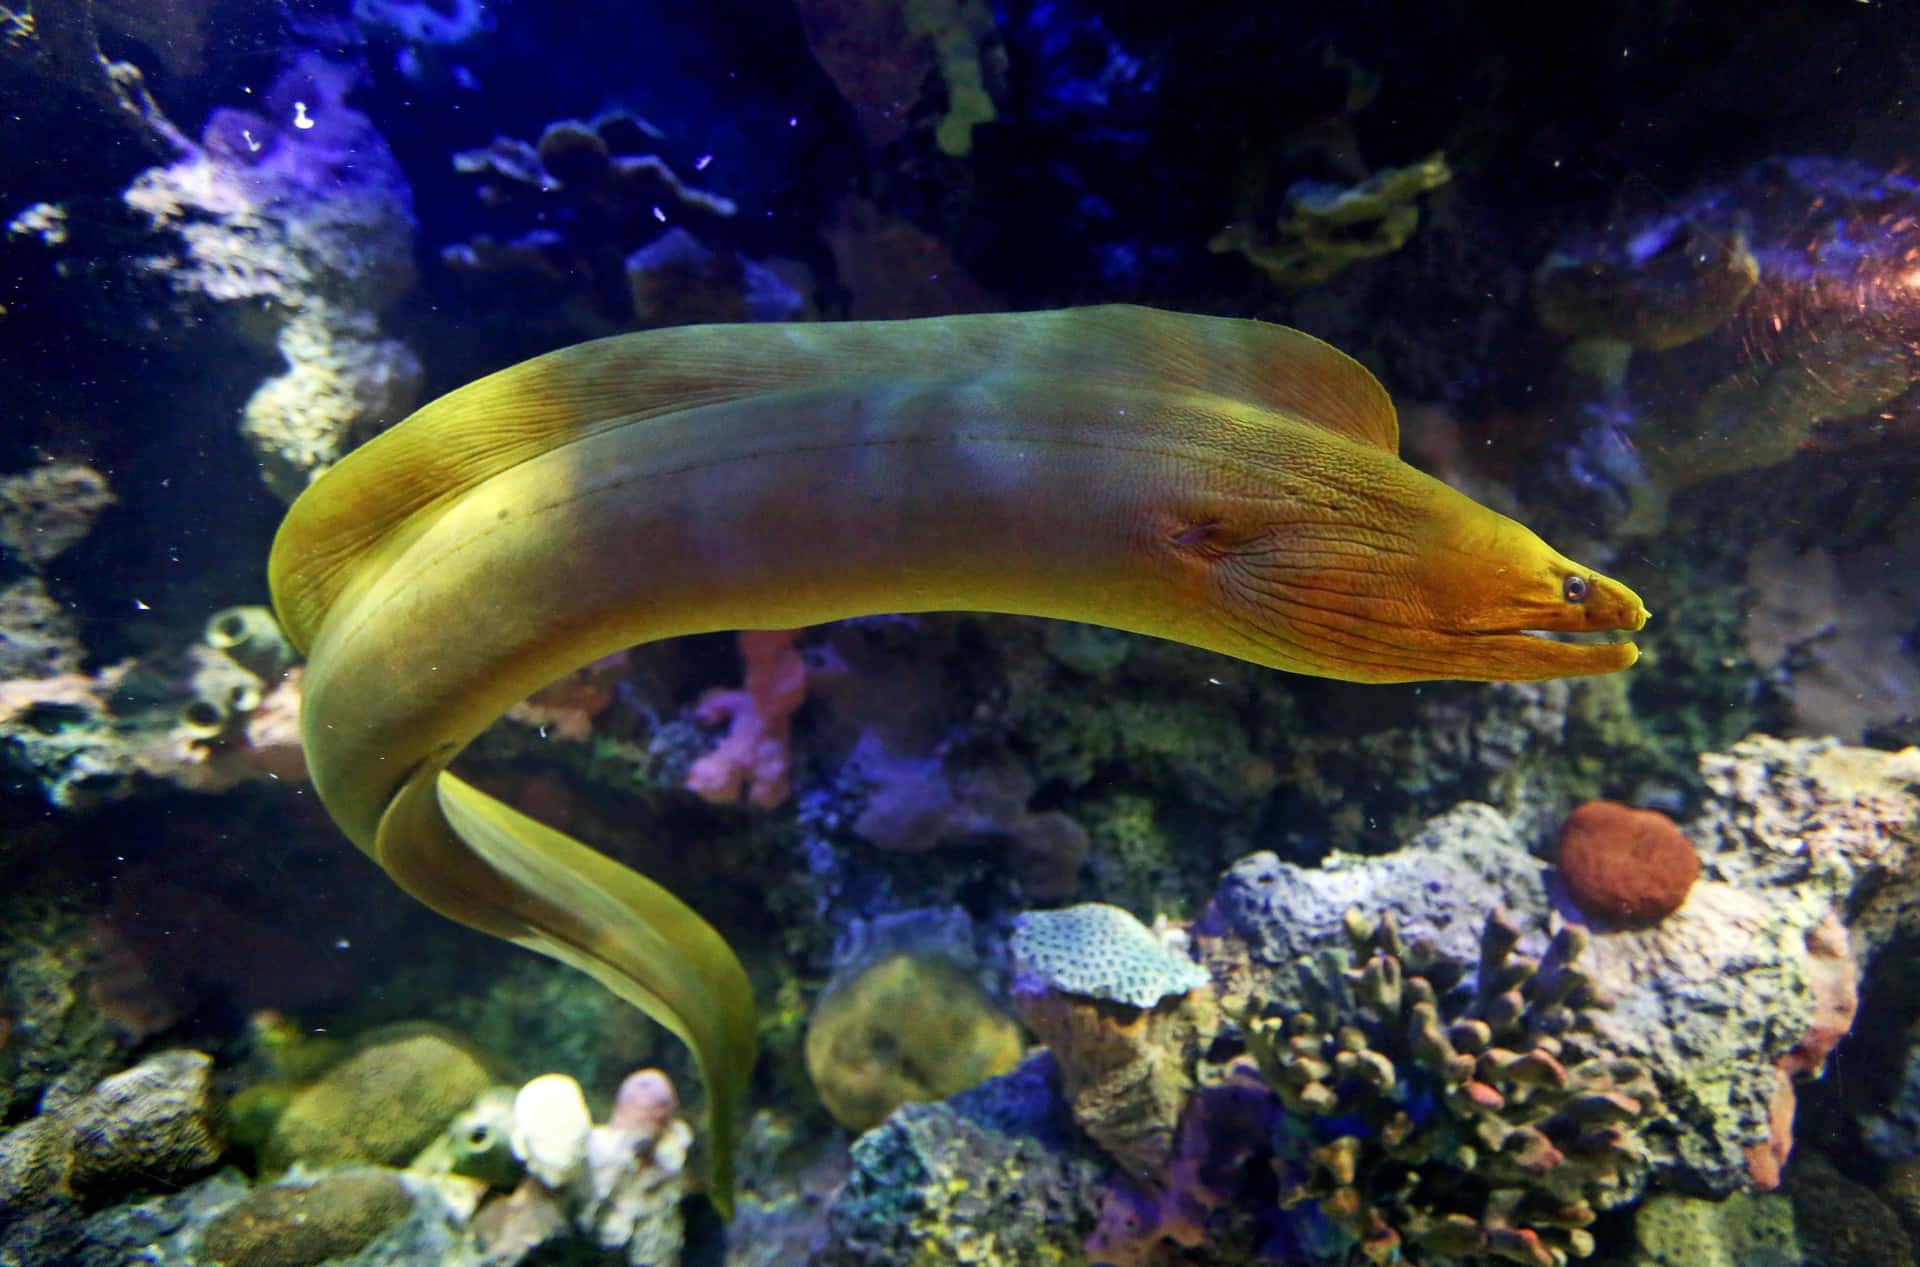 Eel Swimming in its Natural Habitat